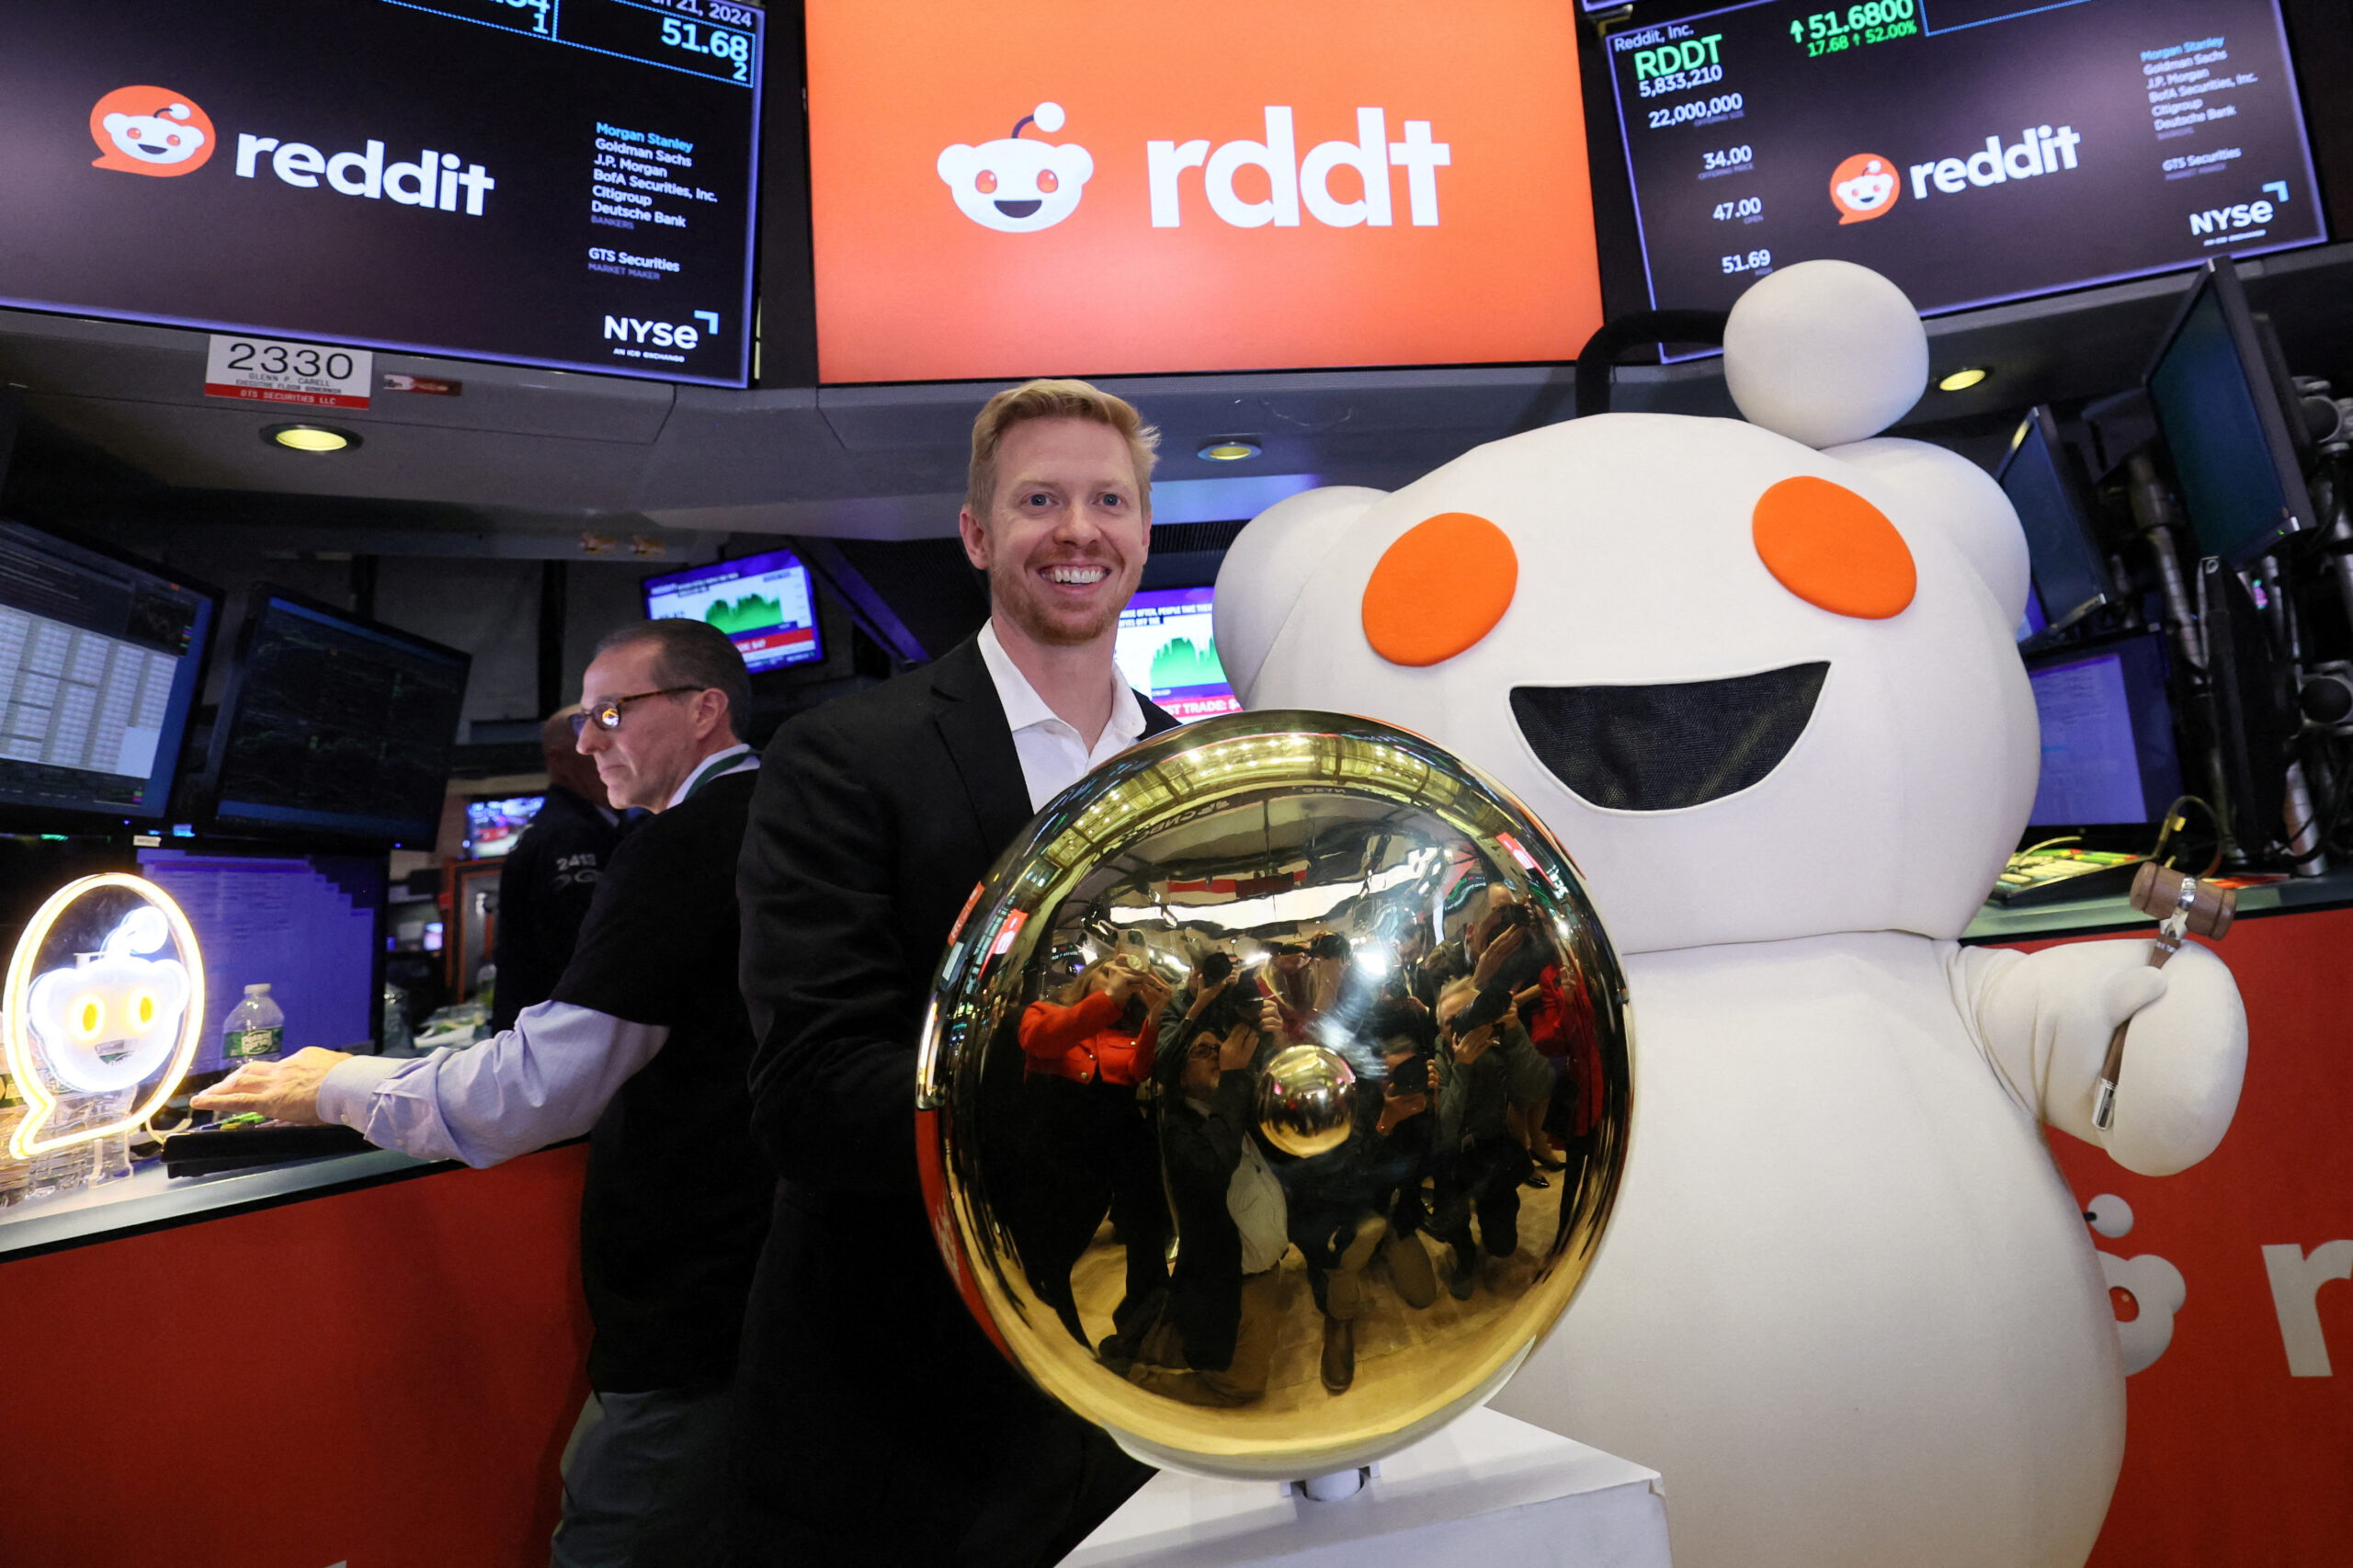 Reddit options launch draws bulls, as shares soar